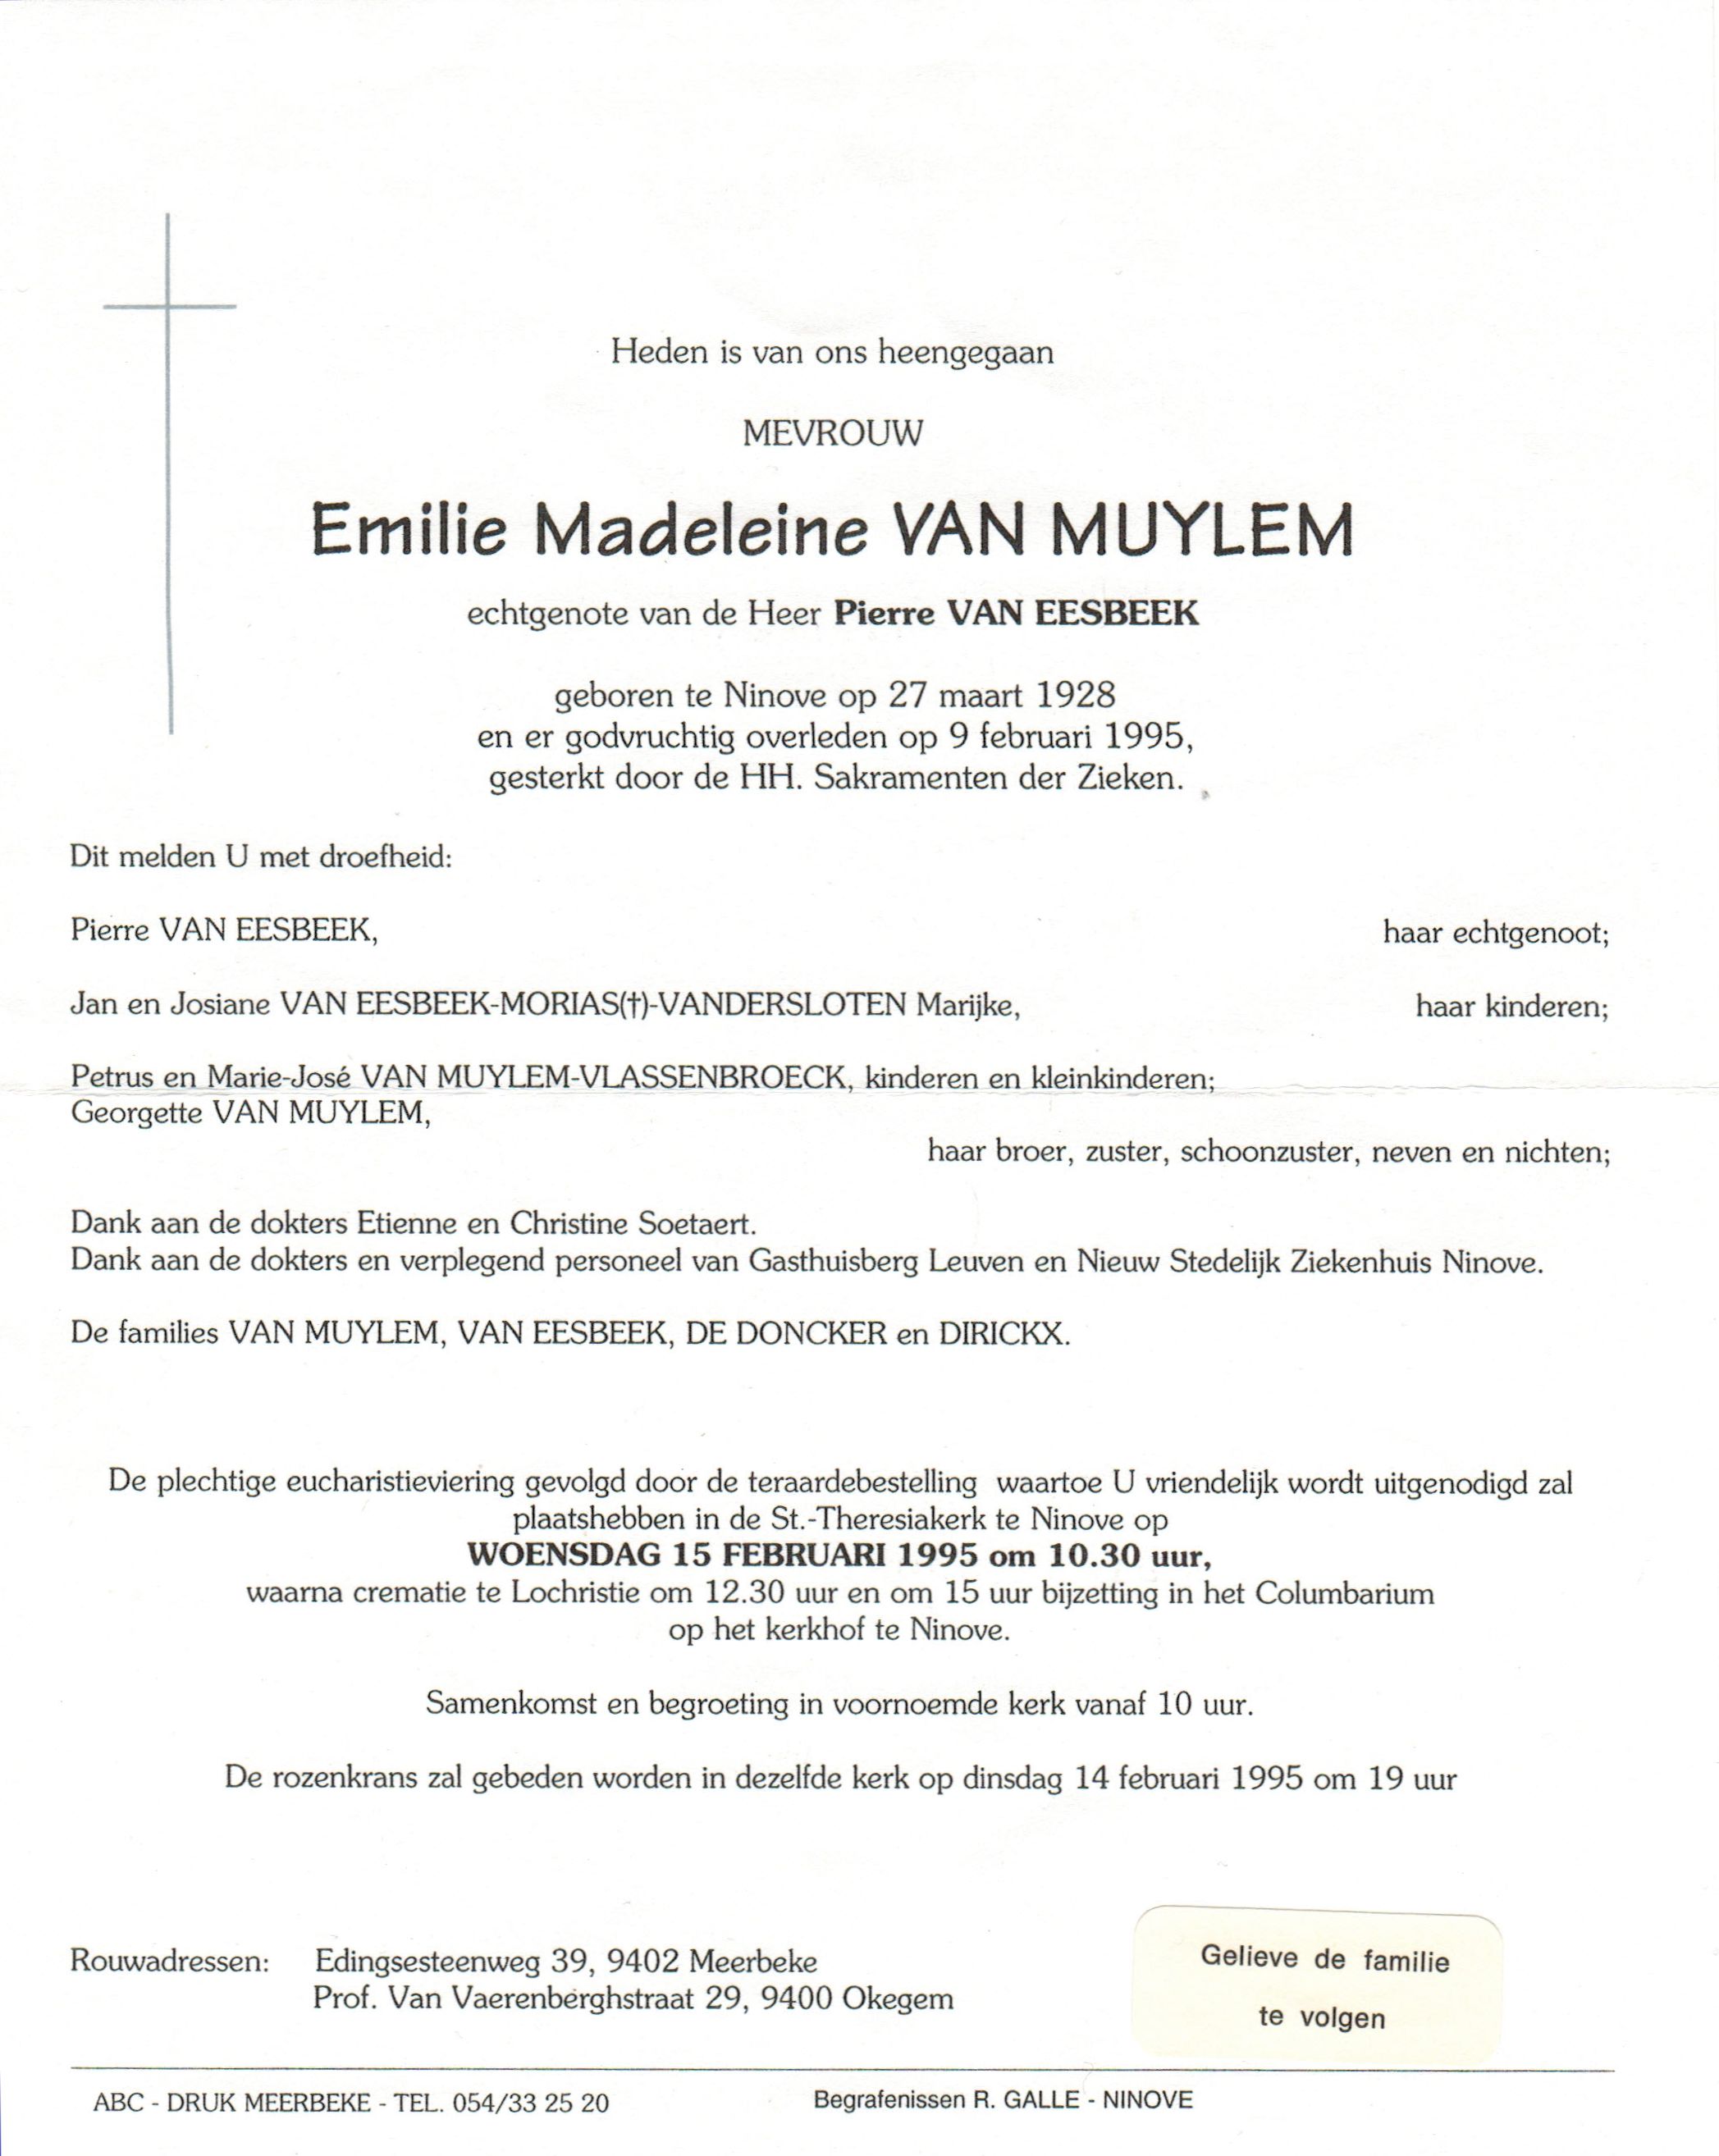 Van Muylem Emilie Madeleine